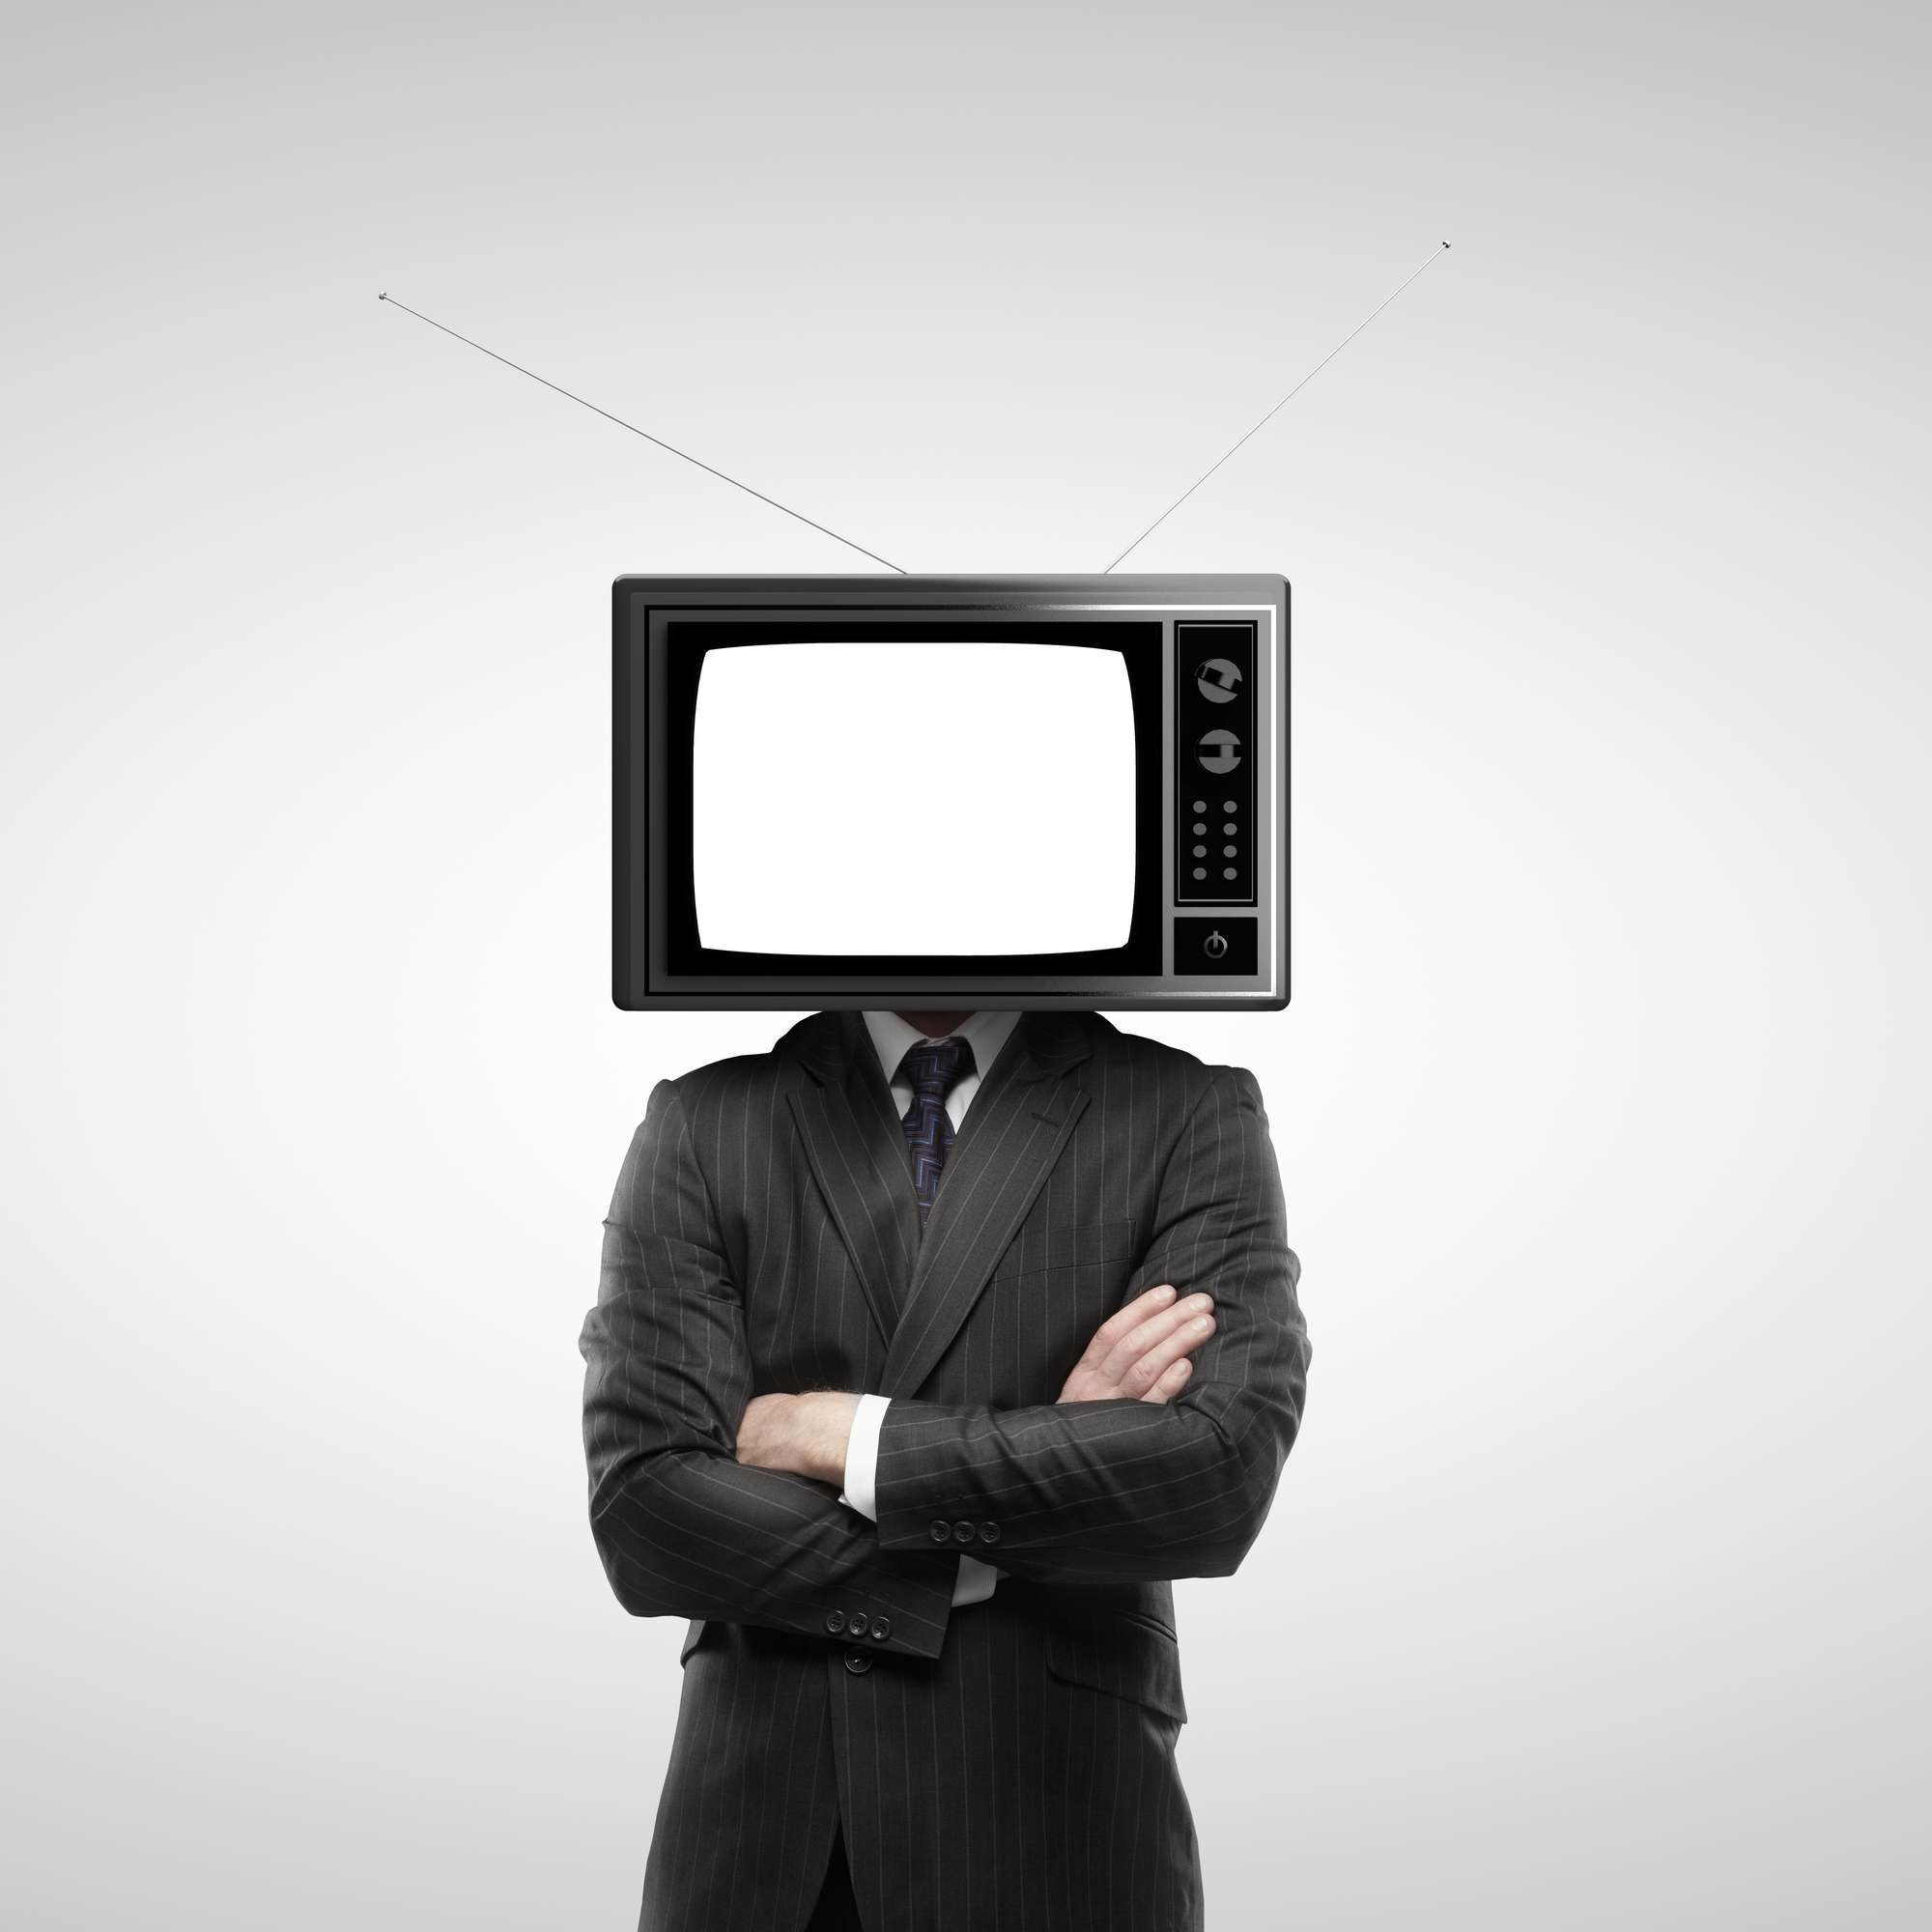 Tv man ttd. Телевизор вместо головы. Голова телевизор. Человек телевизор. Человек с телевизором вместо головы.